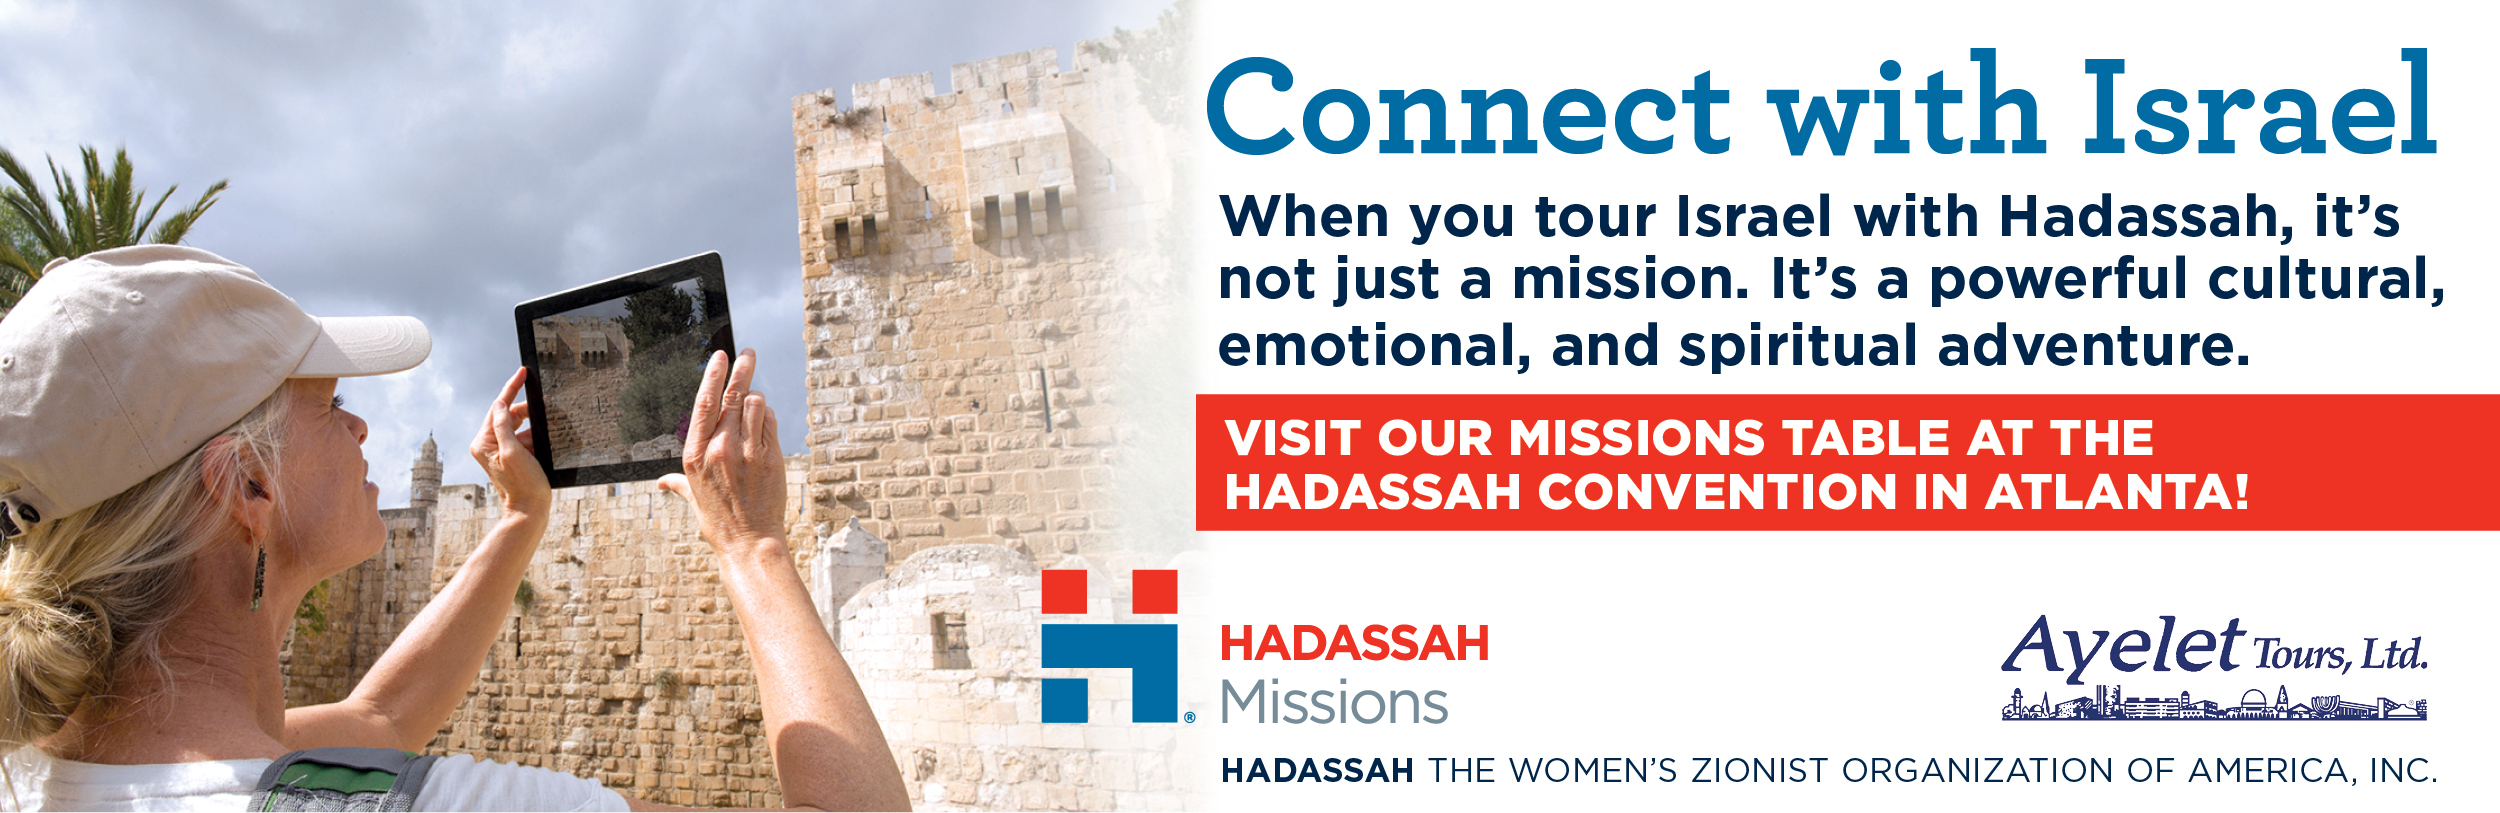 Hadassah Missions